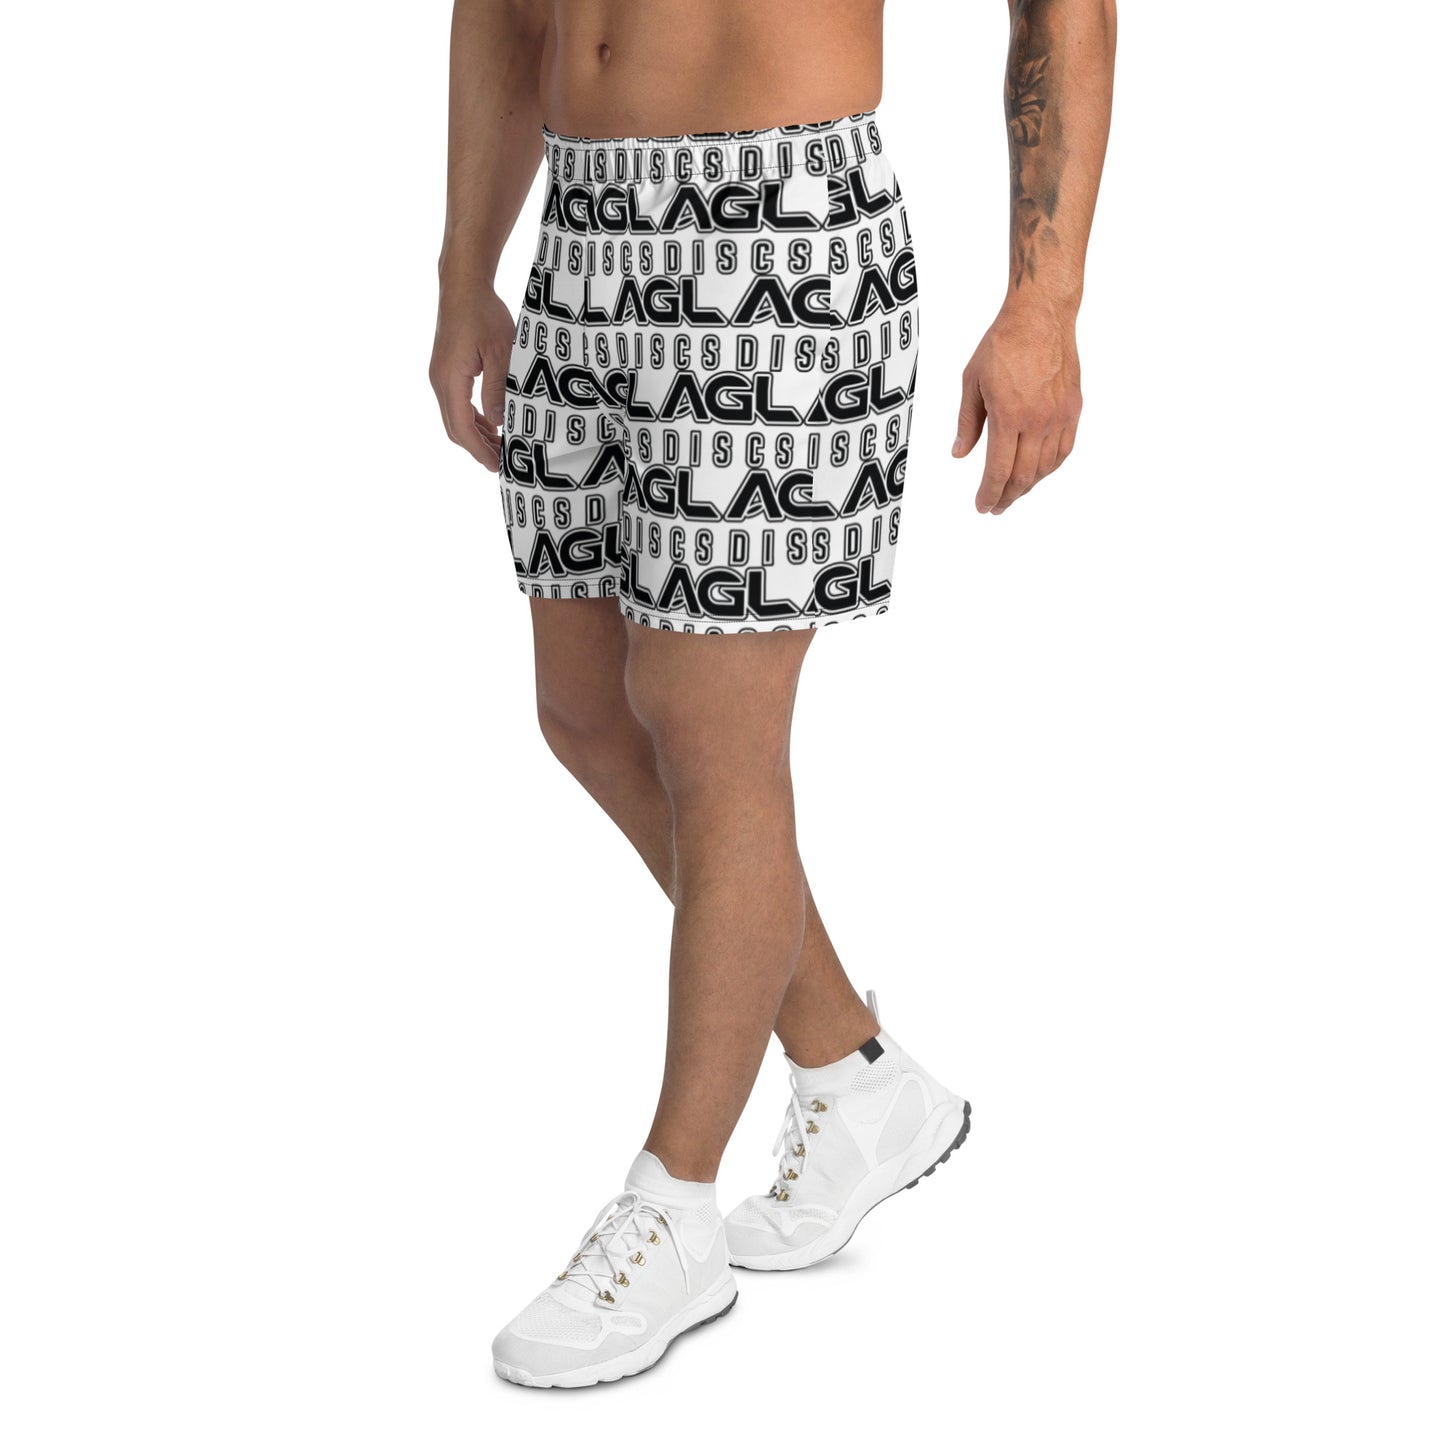 AGL Discs - No Bar Logo Pattern Men's Recycled Athletic Shorts